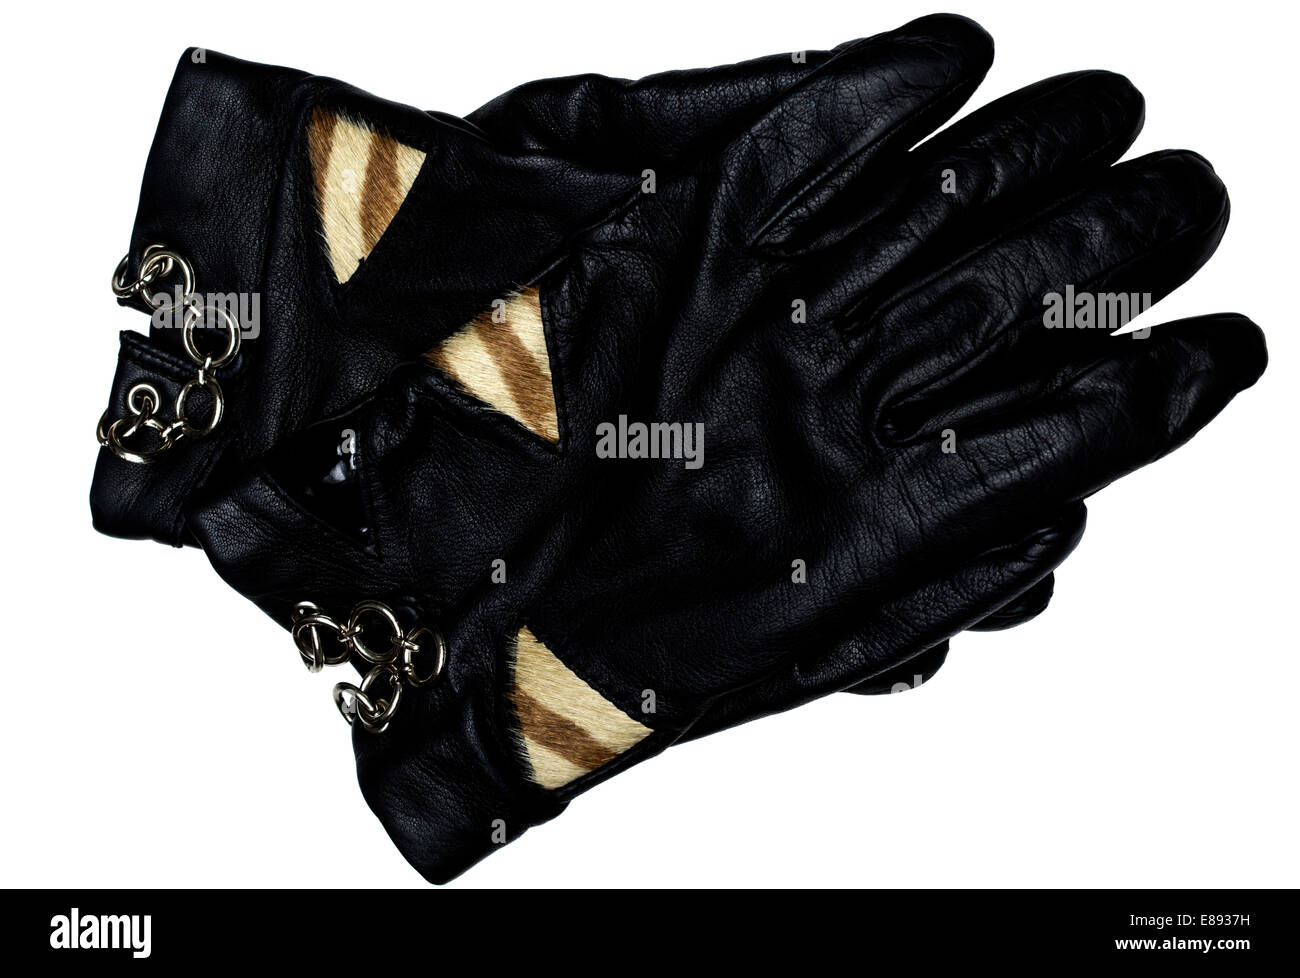 black leather glove isolated on white background Stock Photo